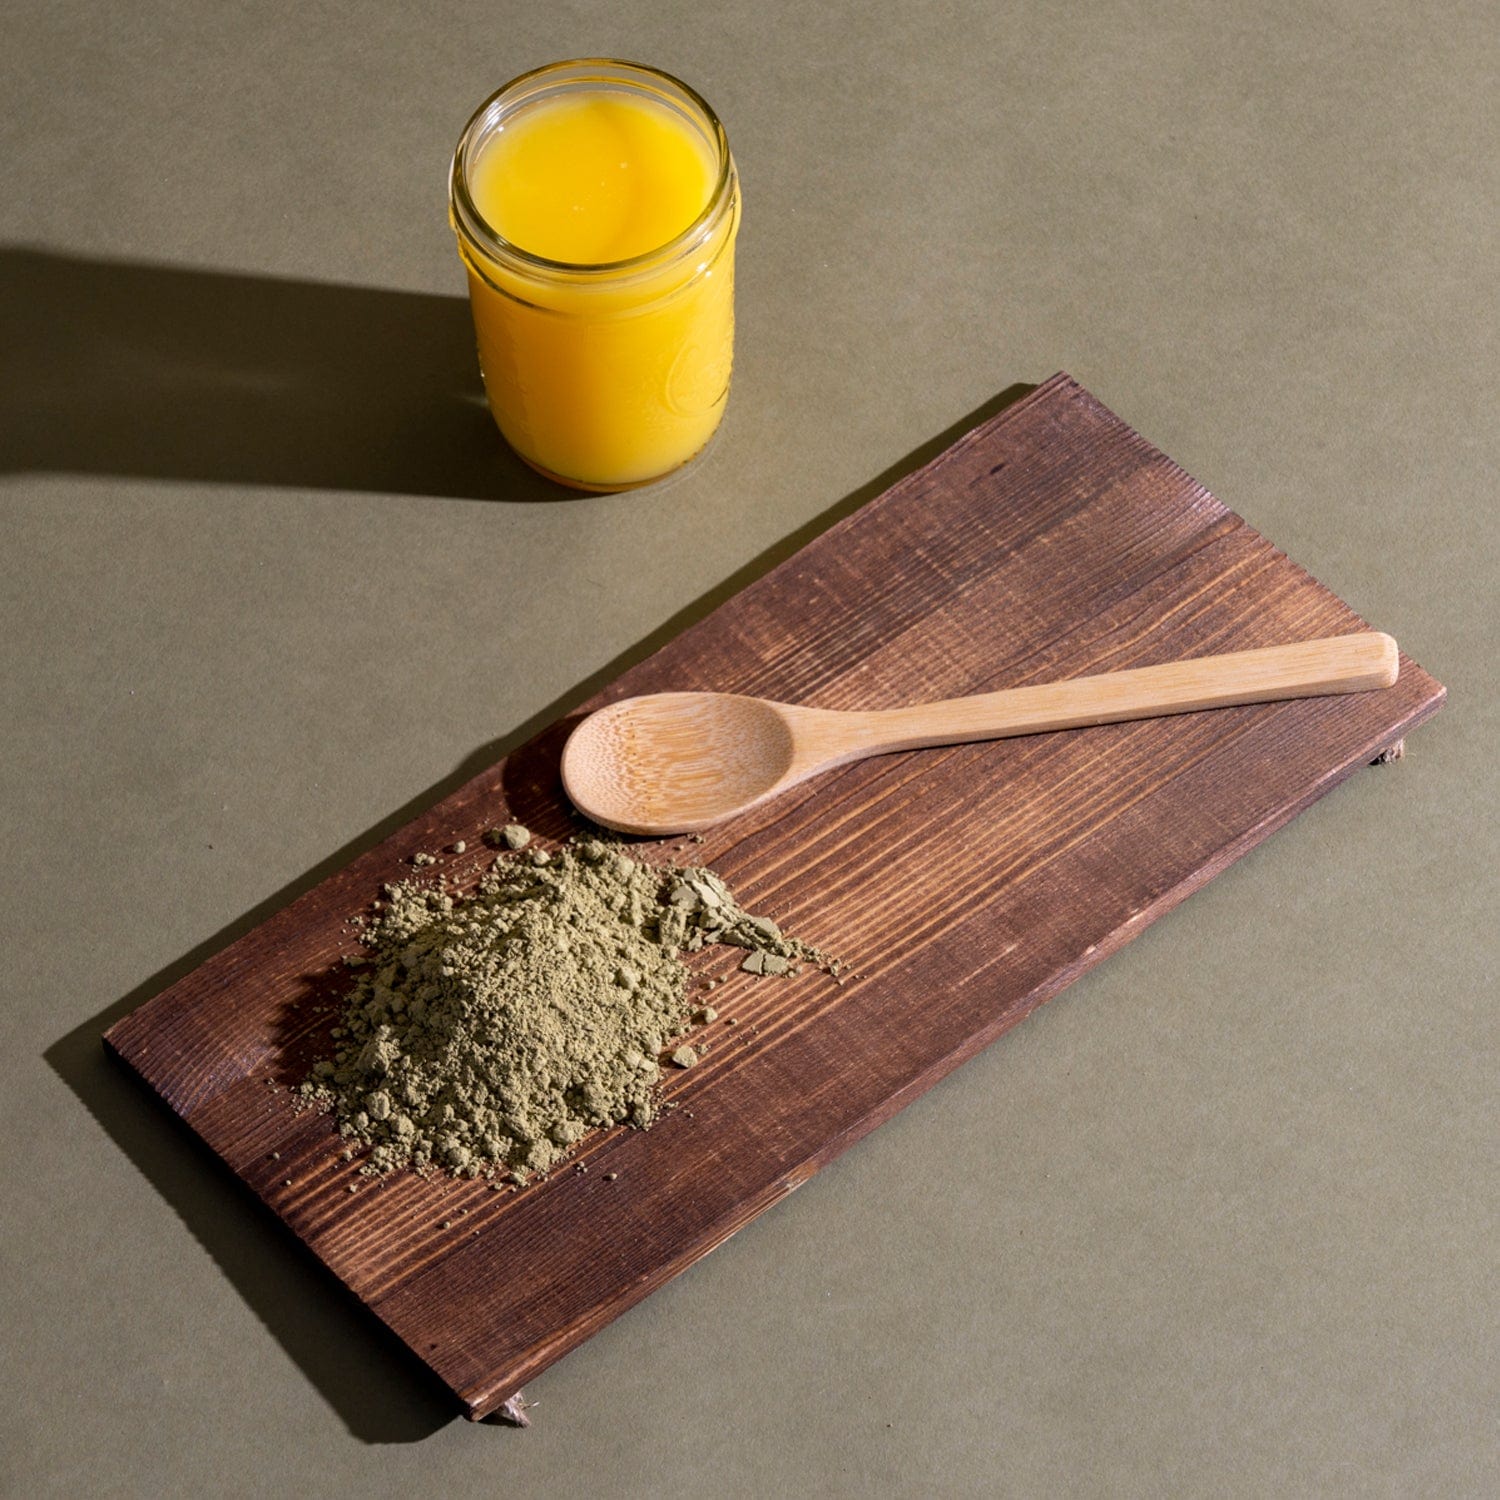 A spoon and kratom powder on a wooden board beside a glass of orange juice